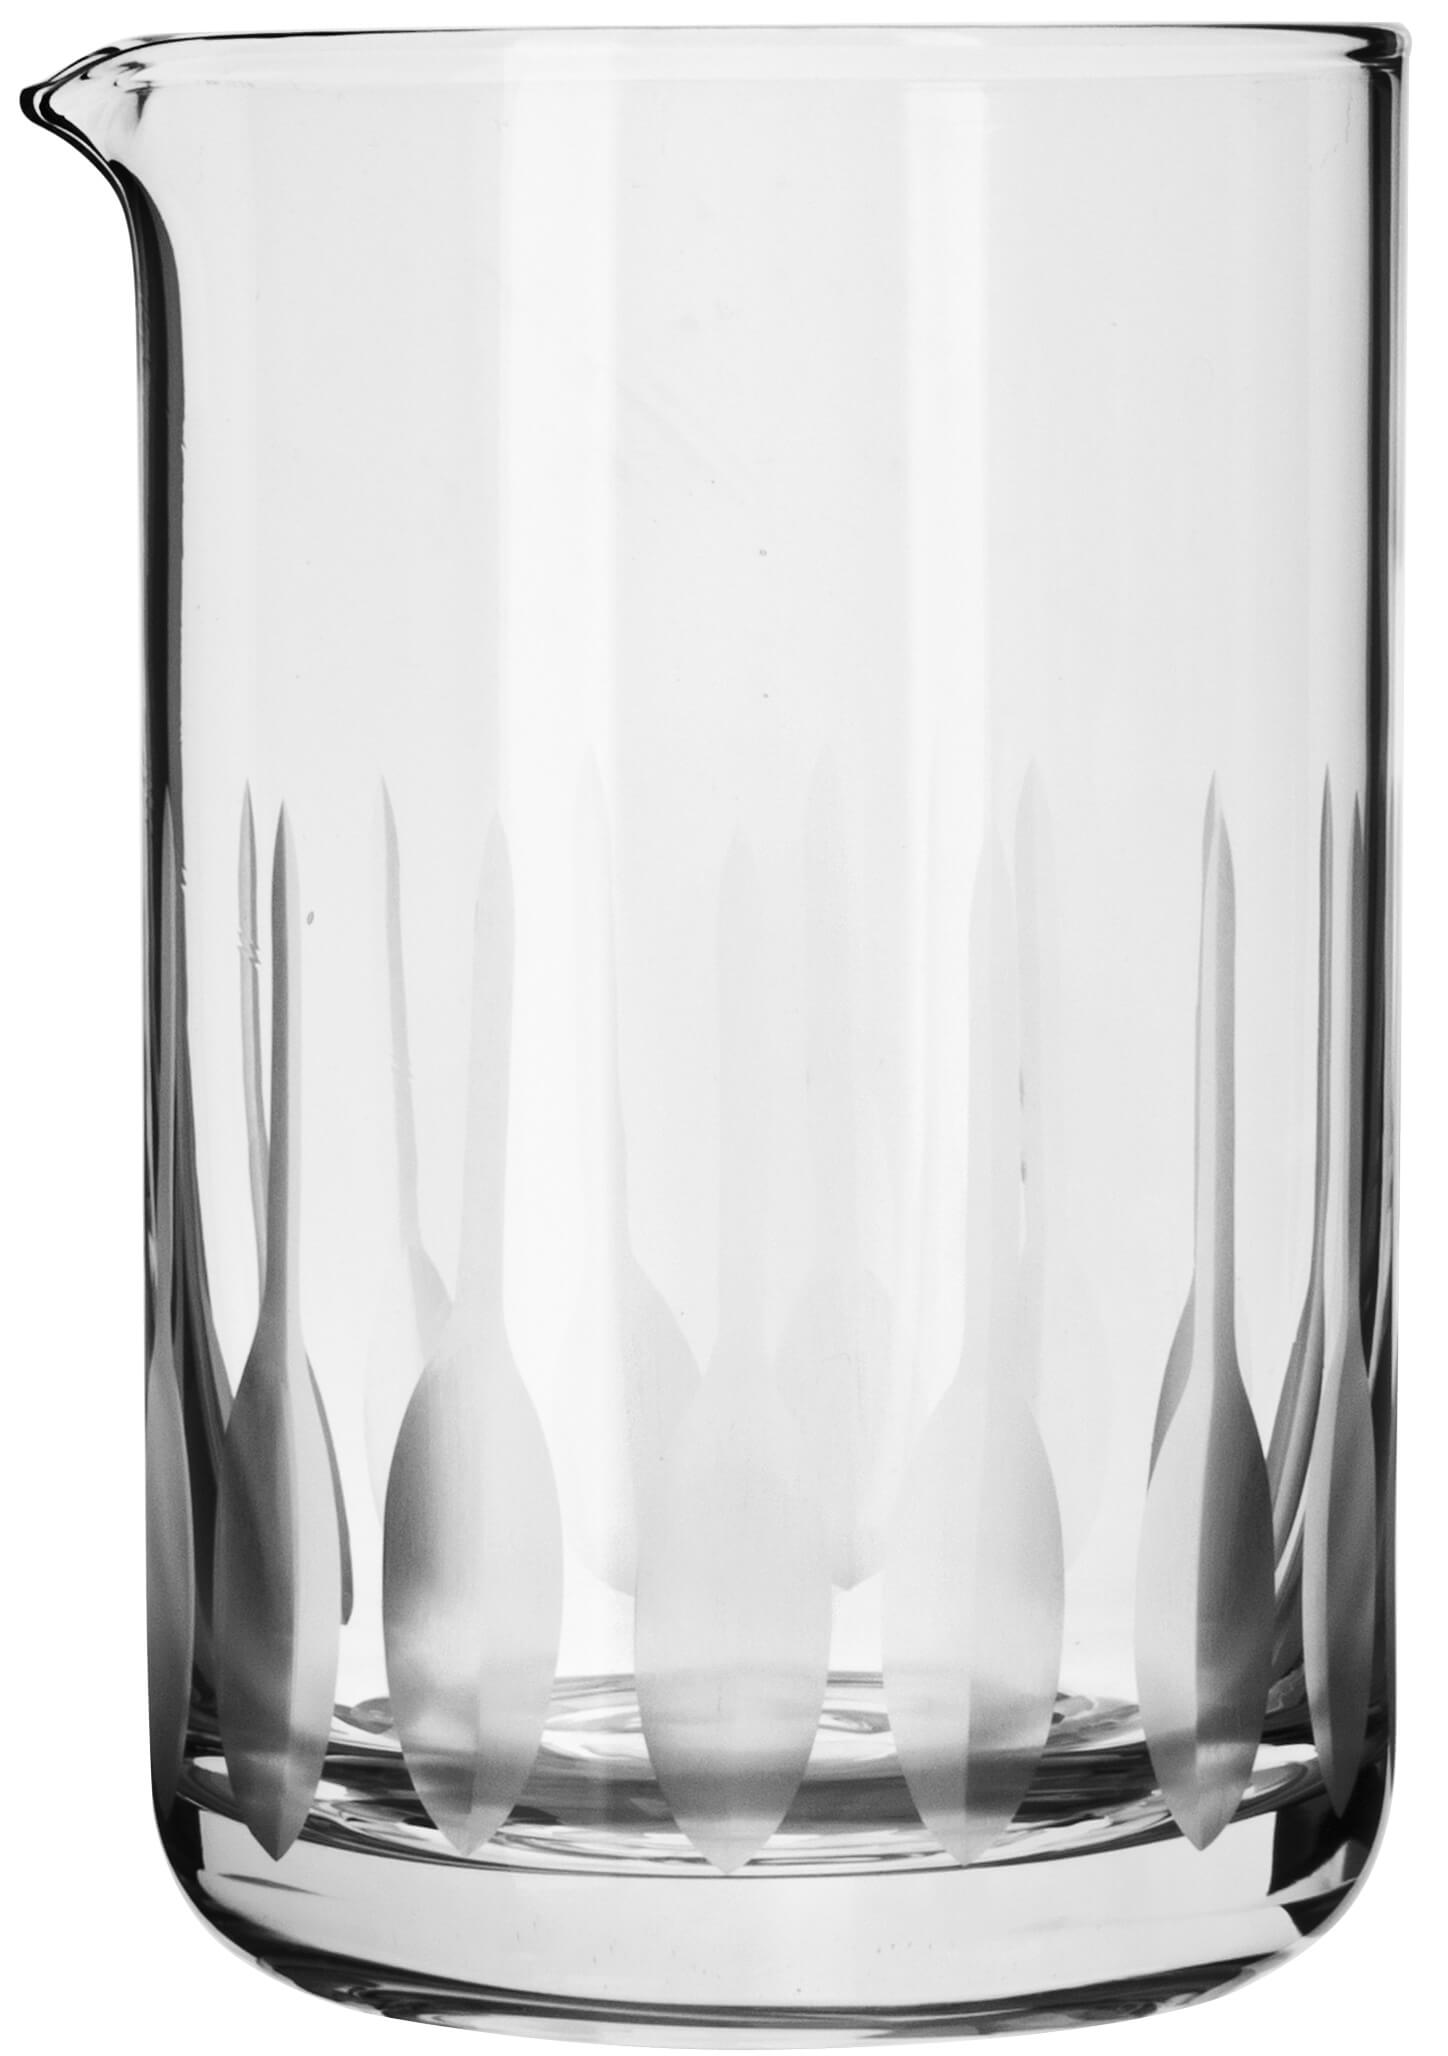 Rührglas Paddle mit Ausgusslippe, Prime Bar - ca. 600ml